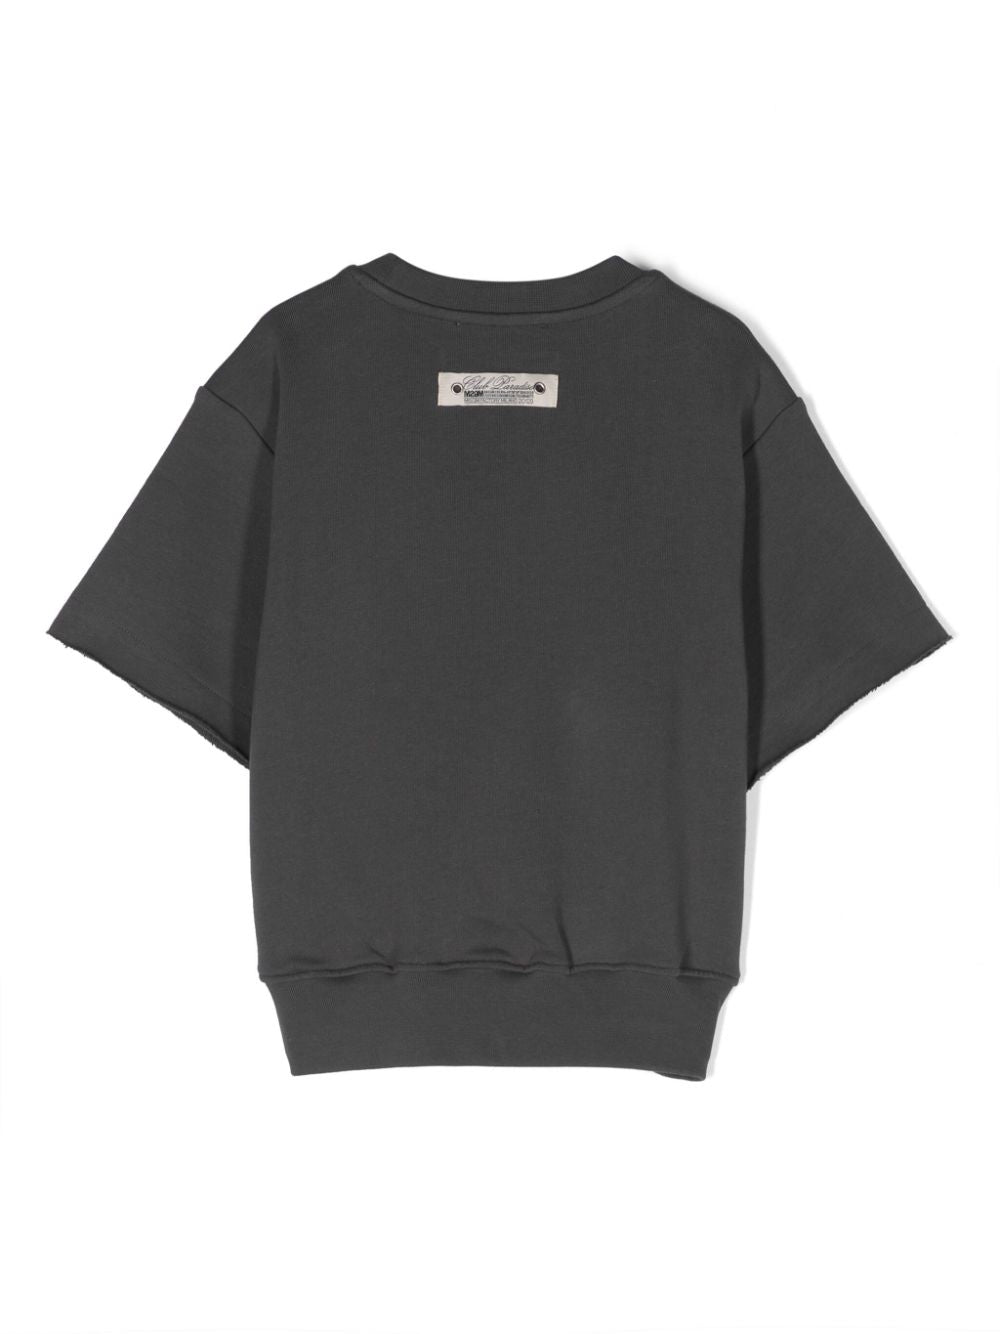 Gray sweatshirt for girls with logo